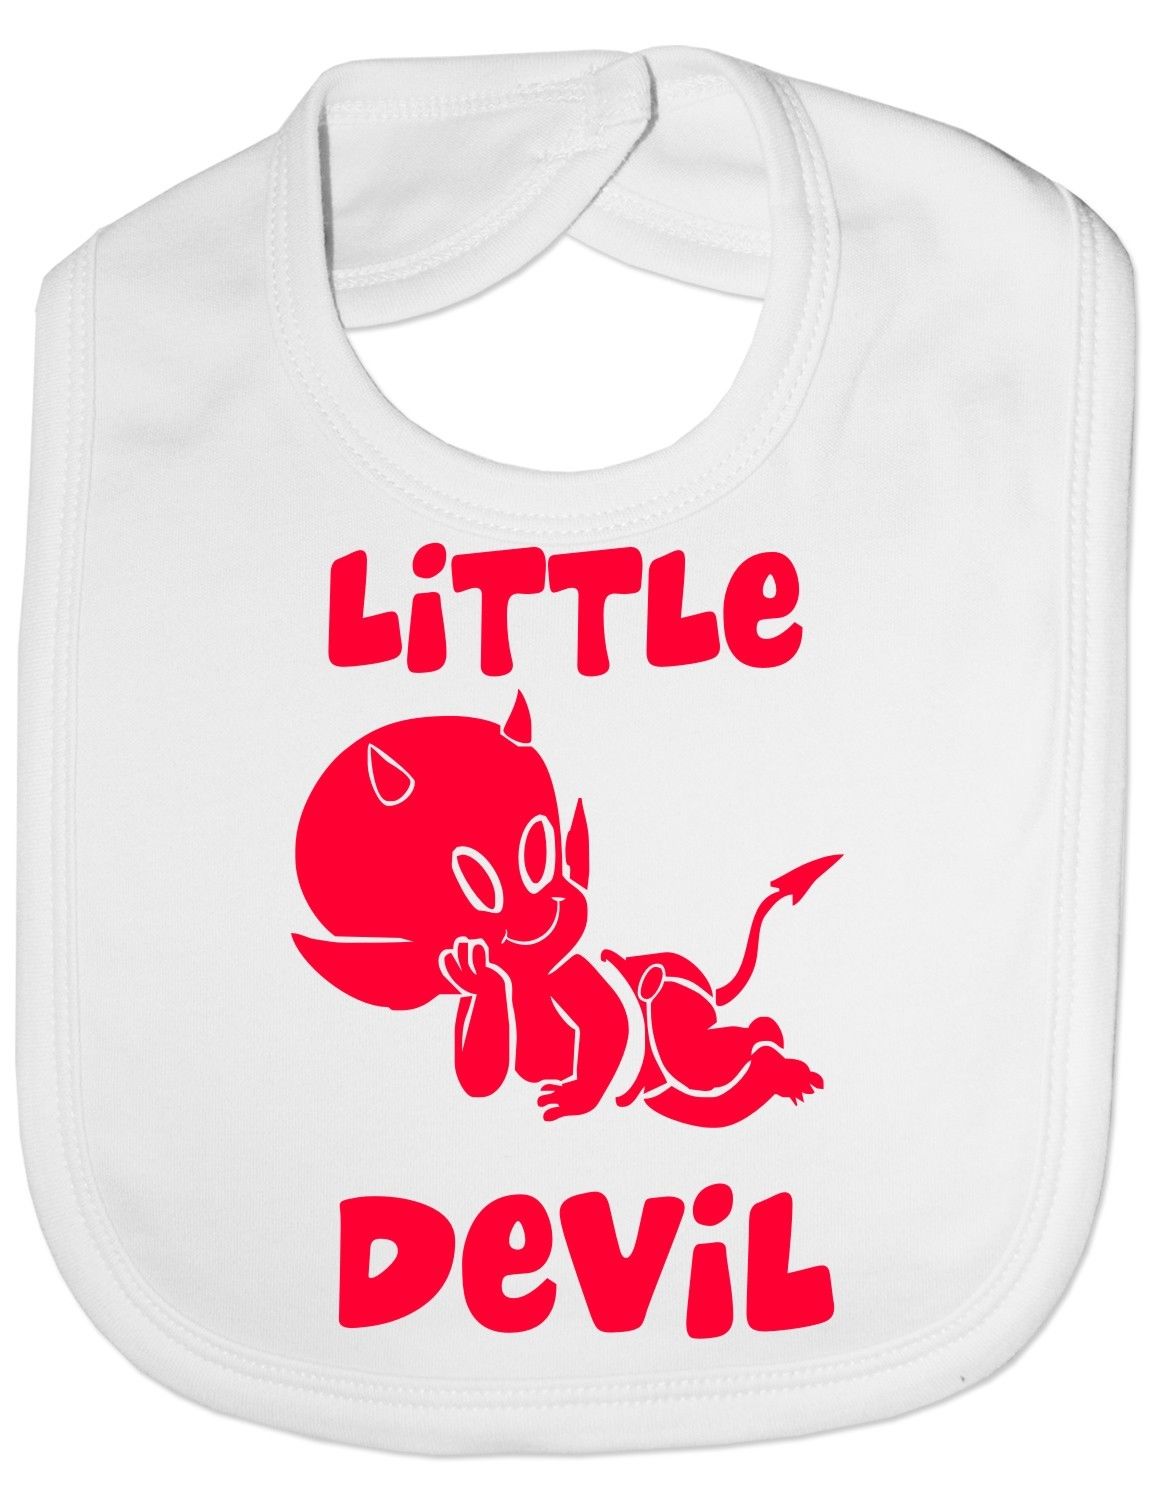 Little Devil Baby Bib